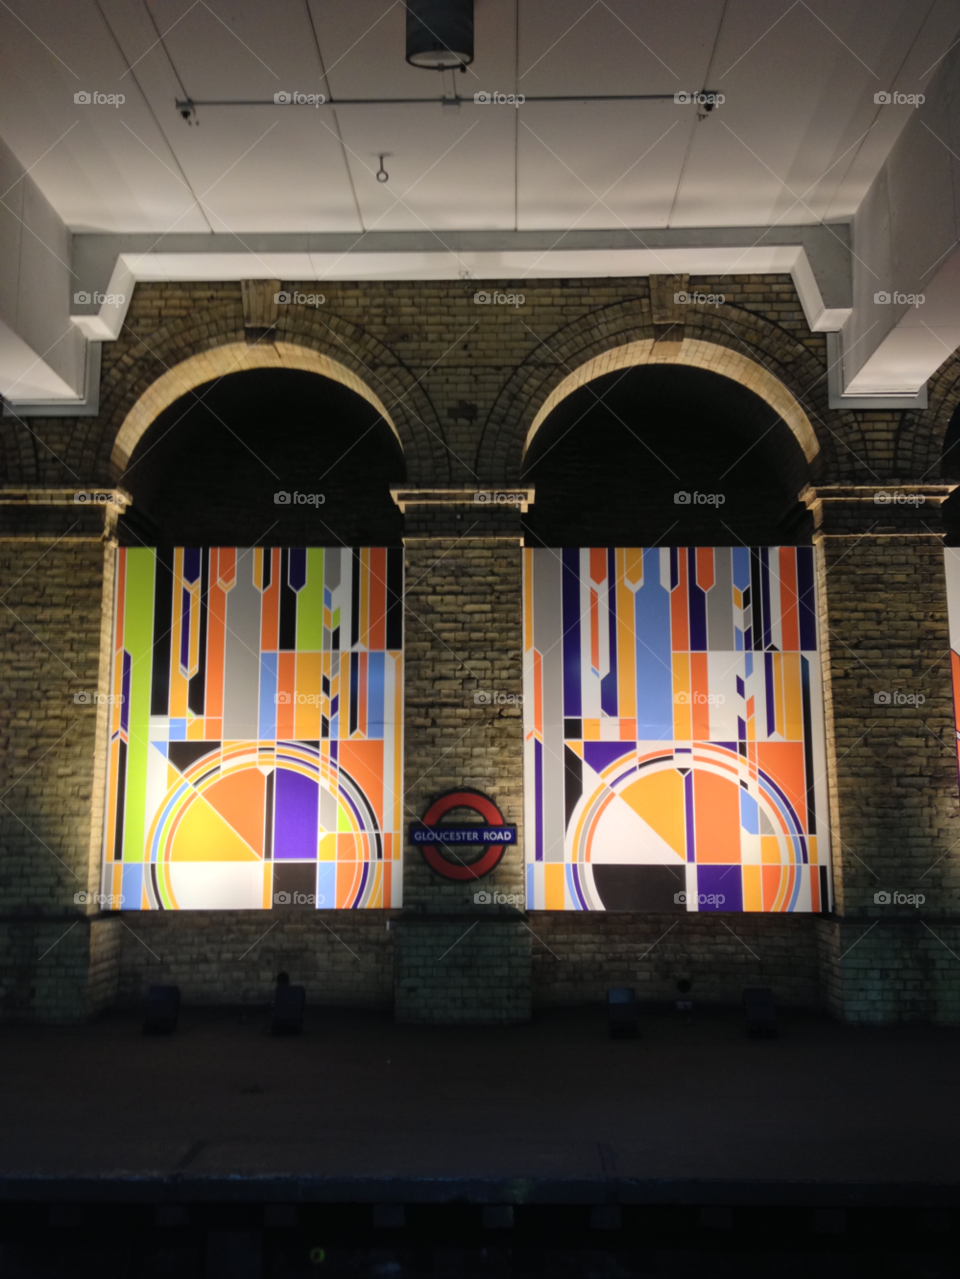 city underground london art by fabiov1.0